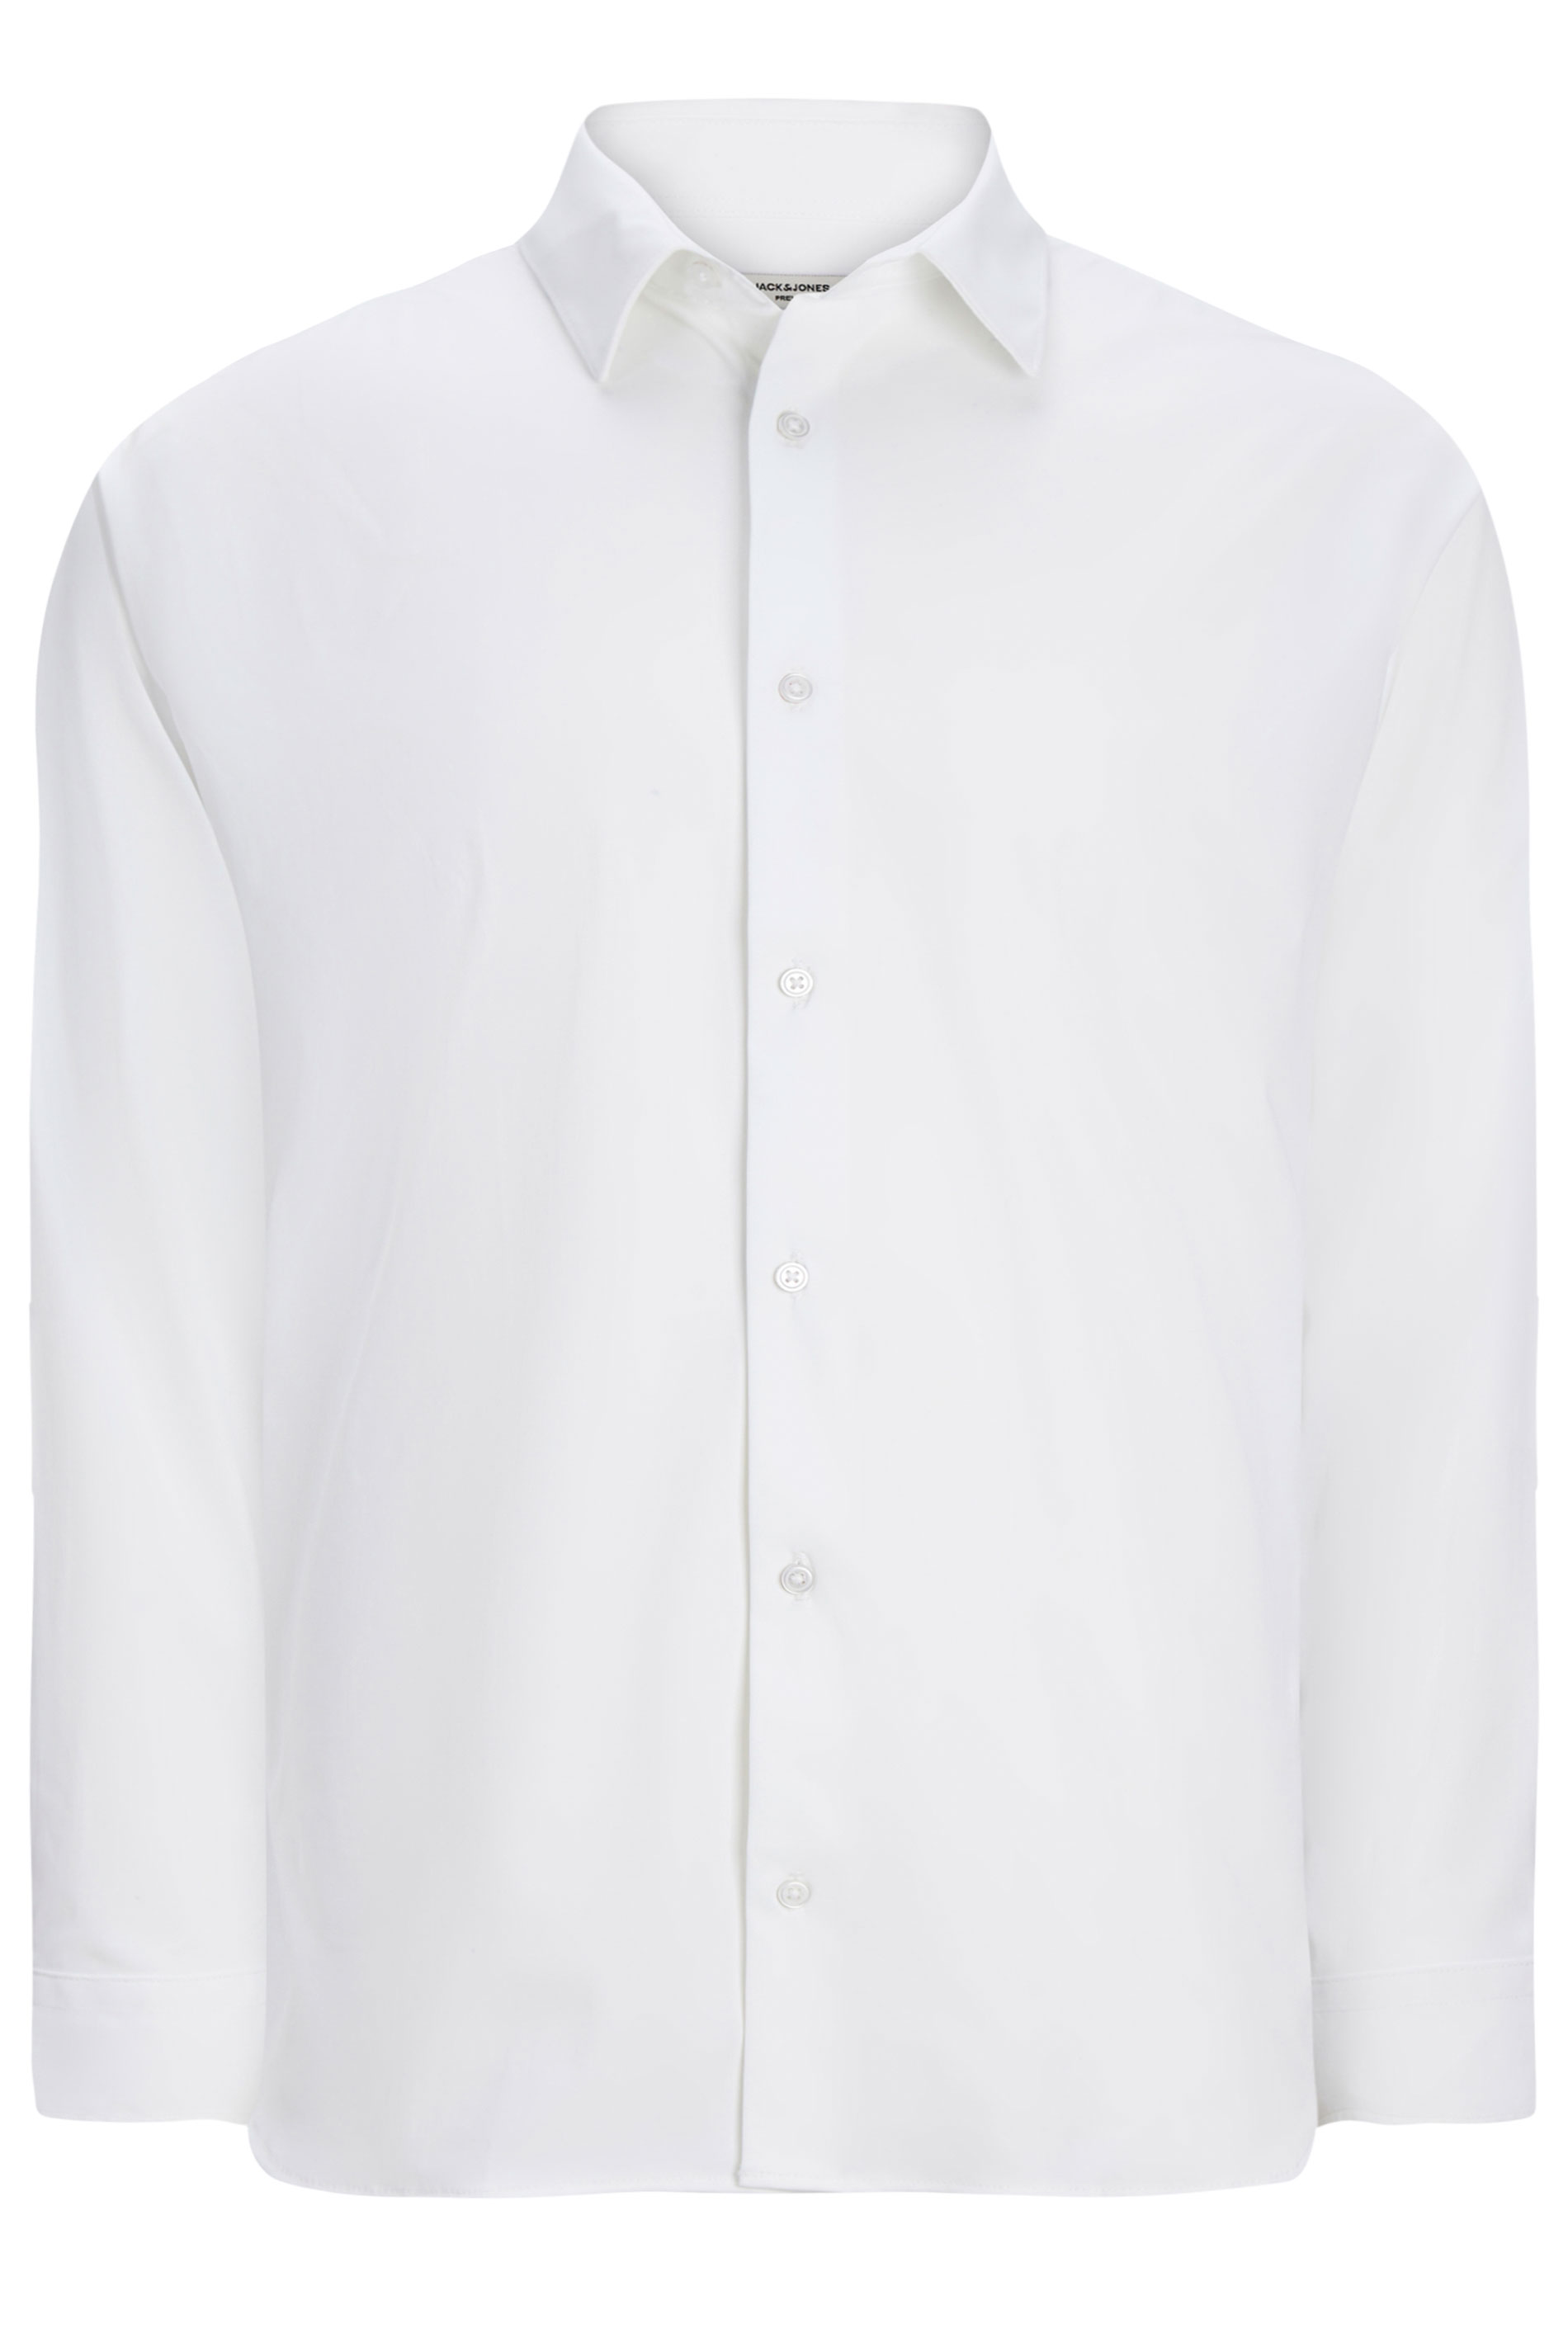 Jack & Jones Big & Tall White Long Sleeve Stretch Shirt | BadRhino 2